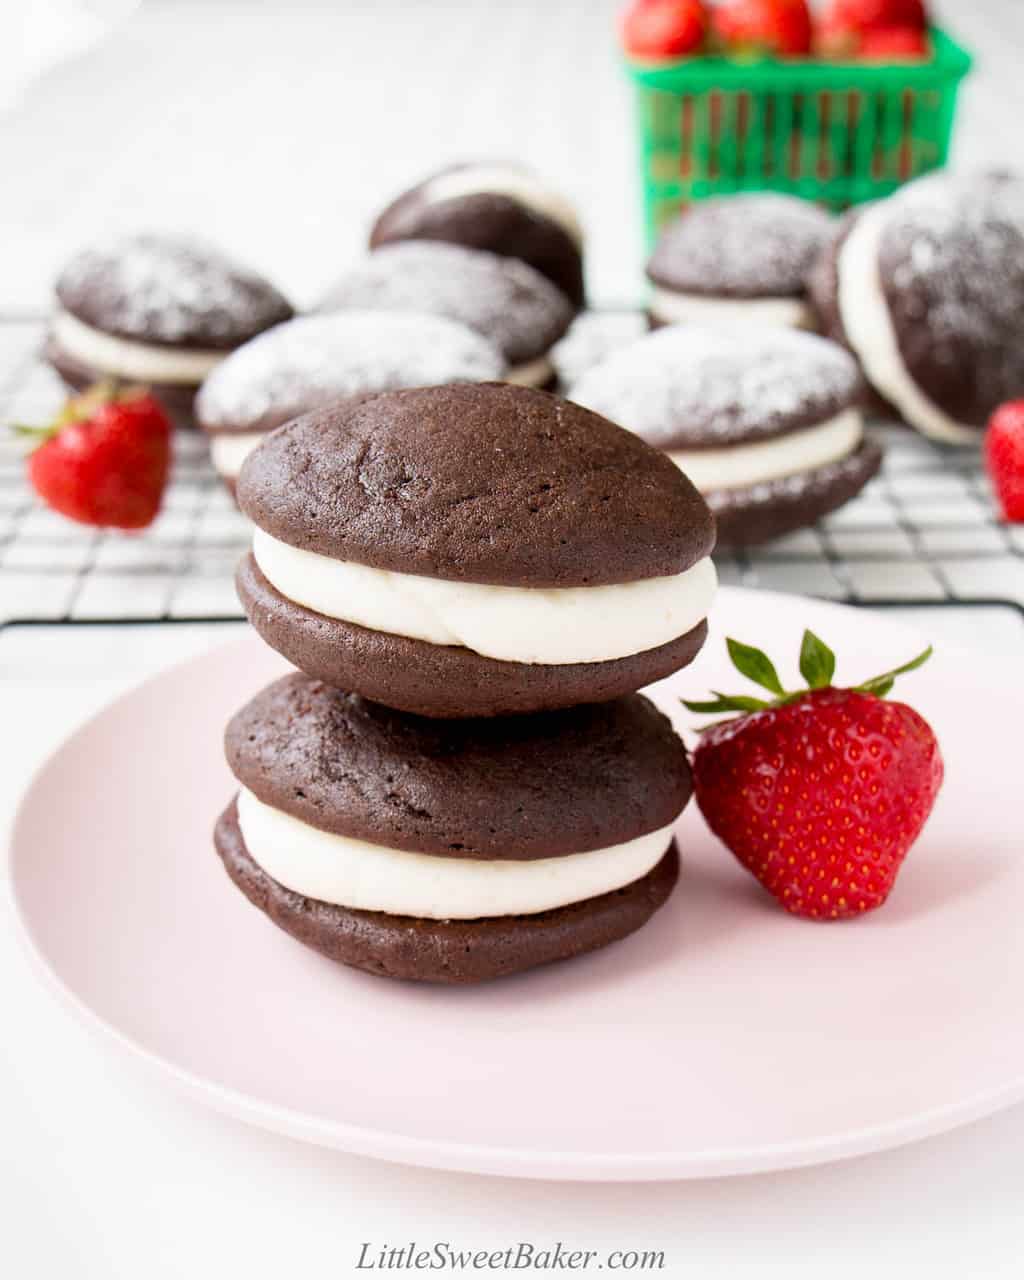 Chocolate Whoopie Pies - Amanda's Cookin' - Cake & Cupcakes